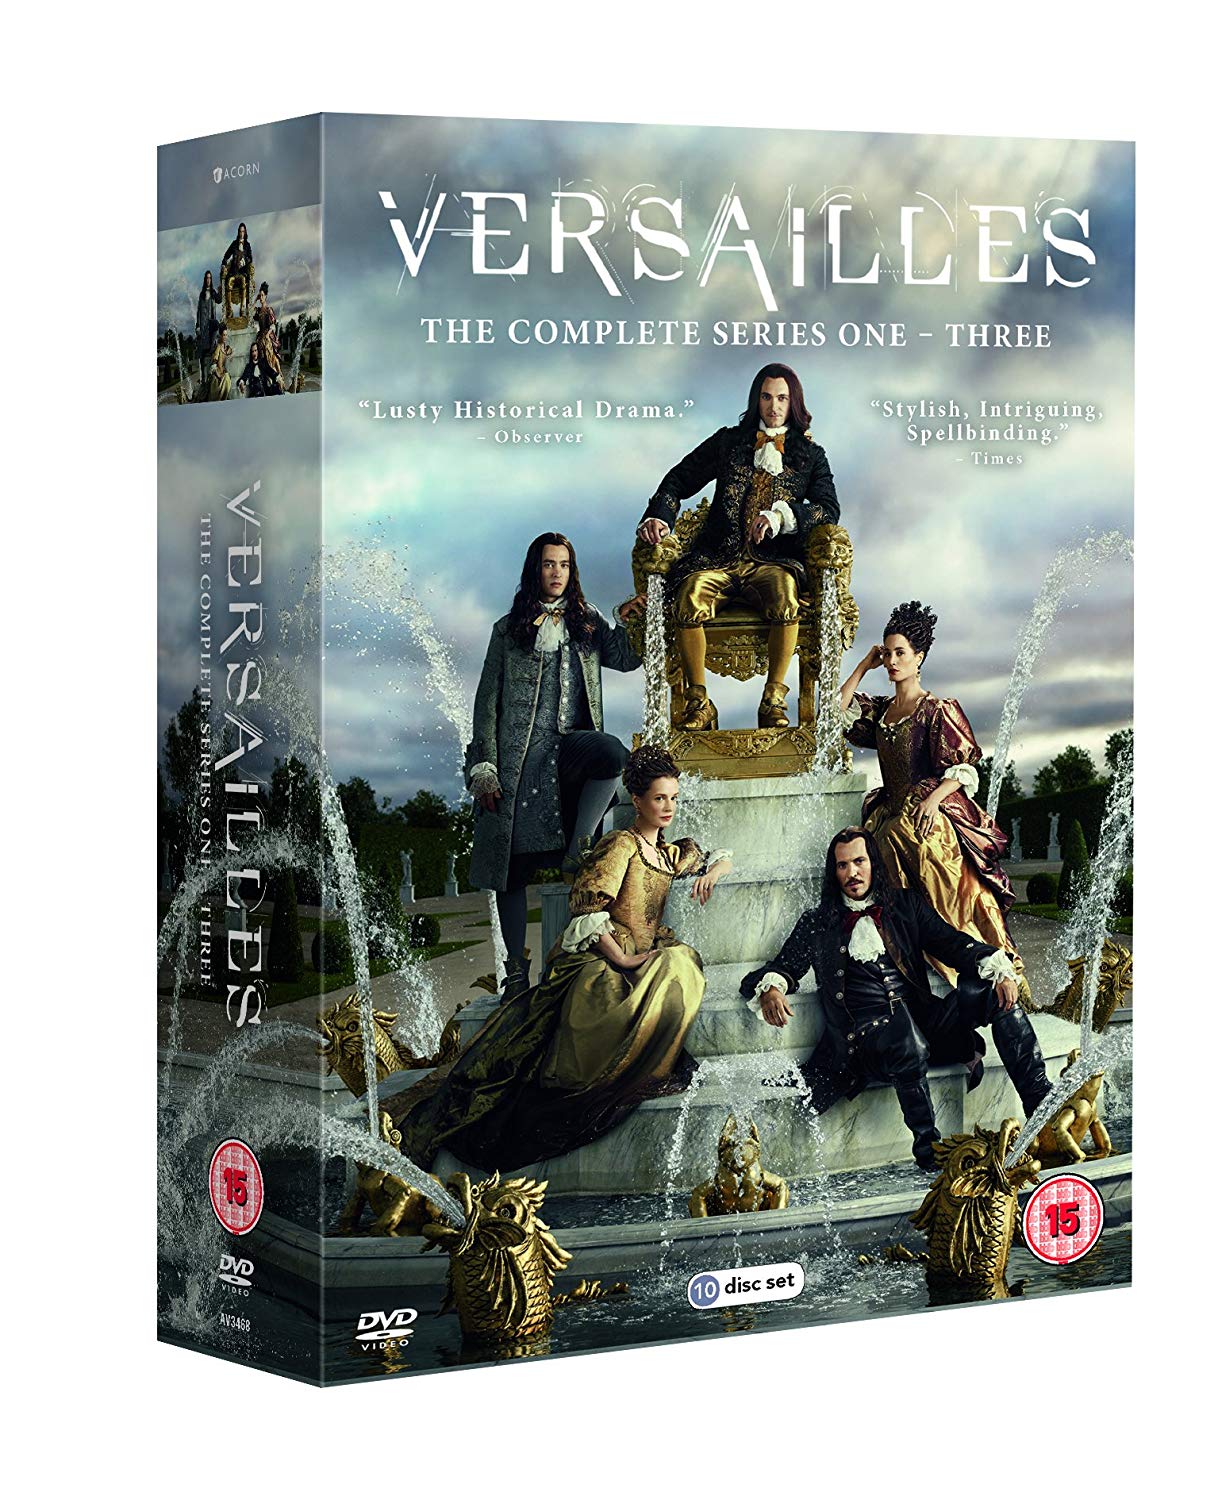 boom competitions - Versailles series 1-3 boxset